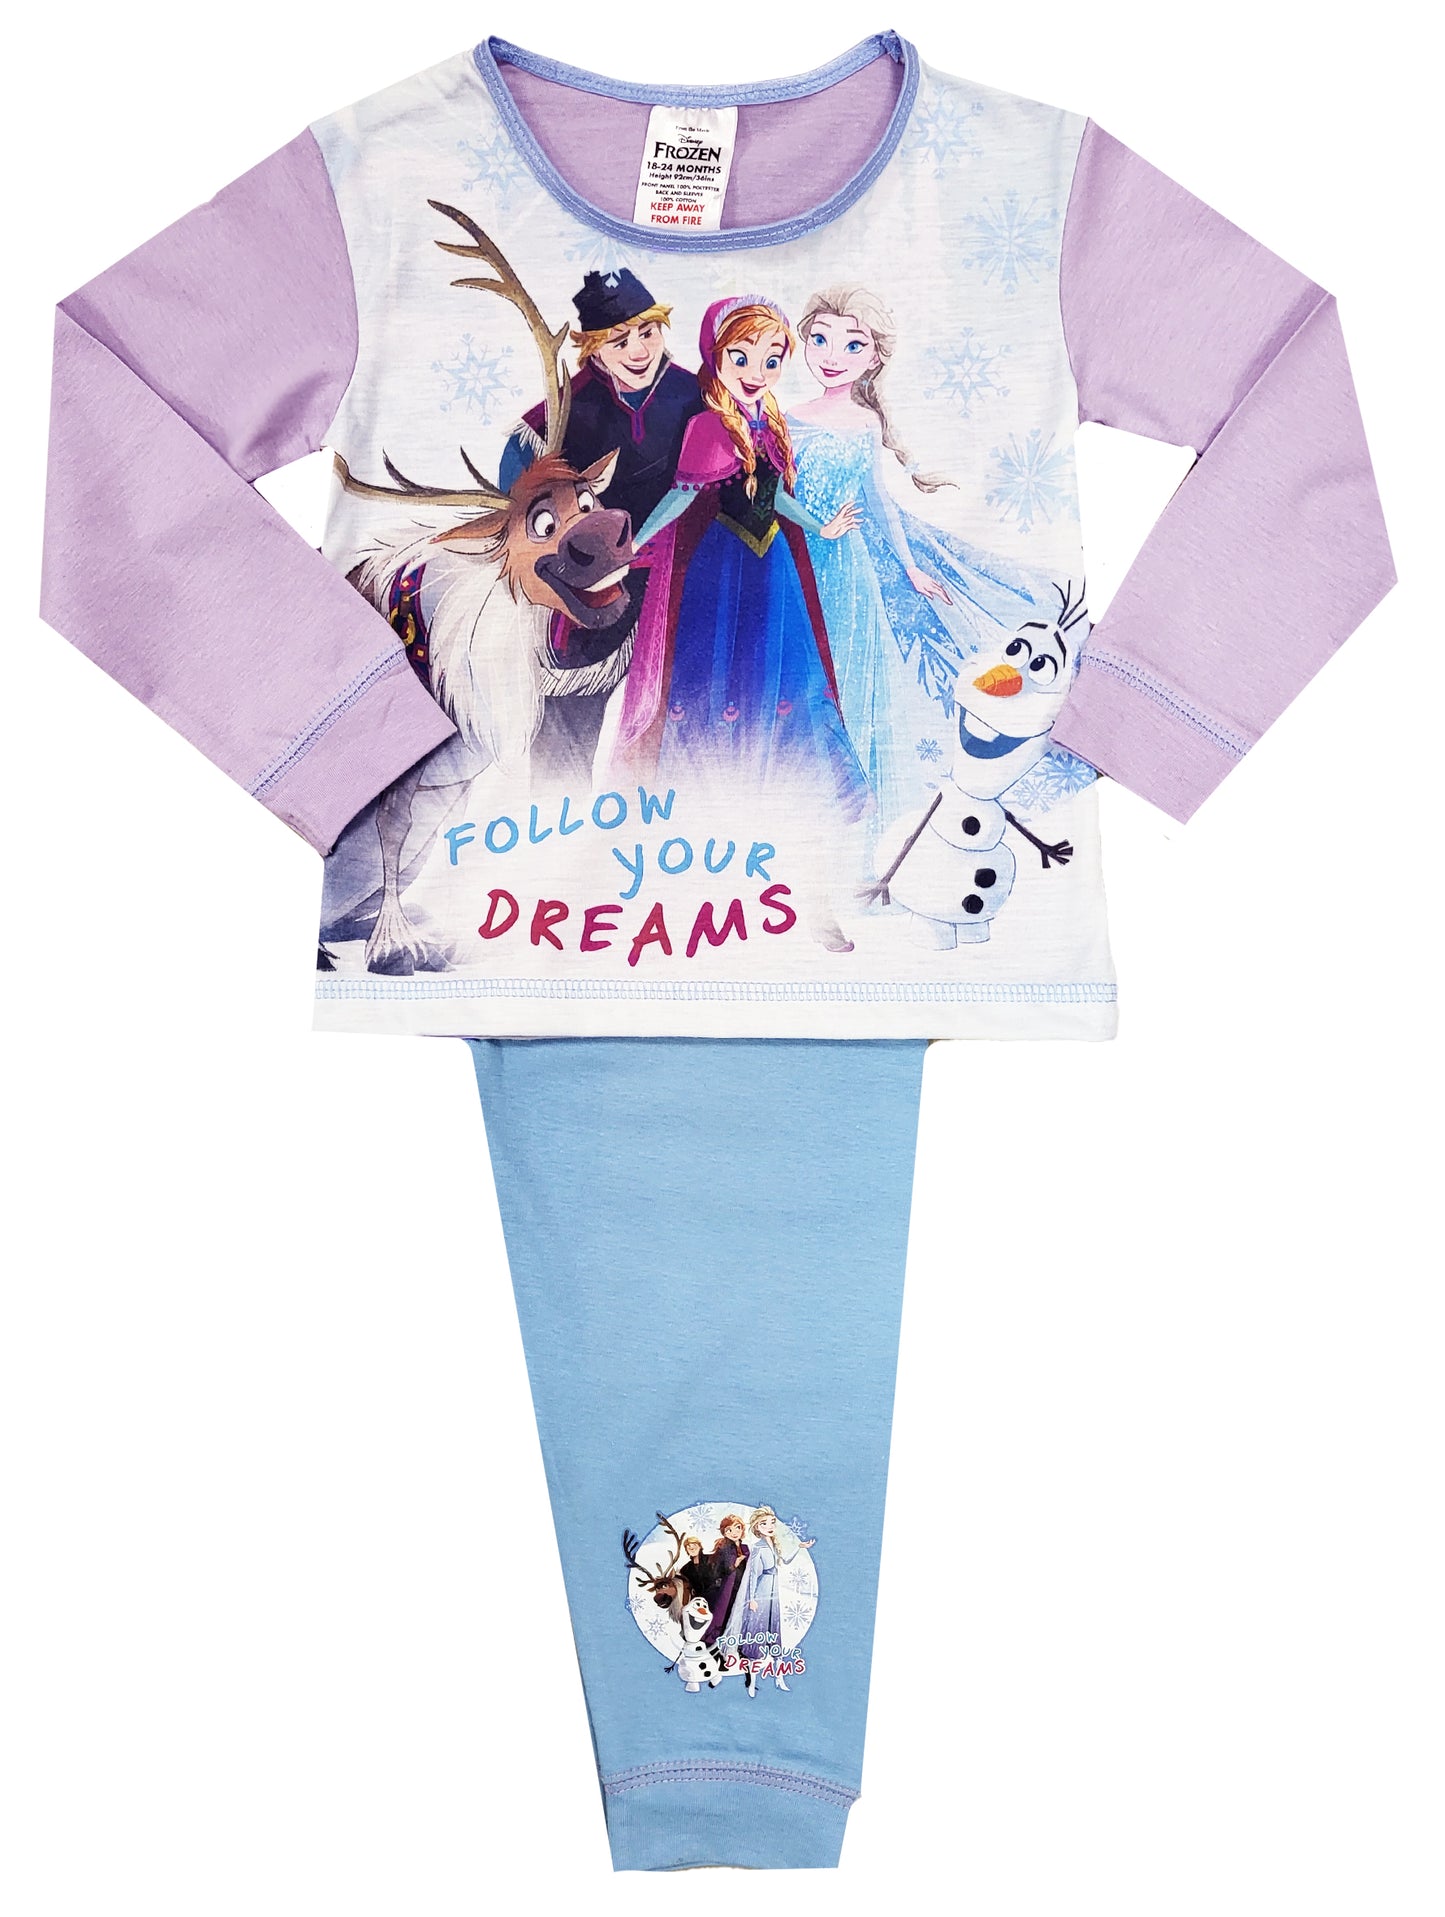 Girls Disney Frozen Pyjamas - Follow